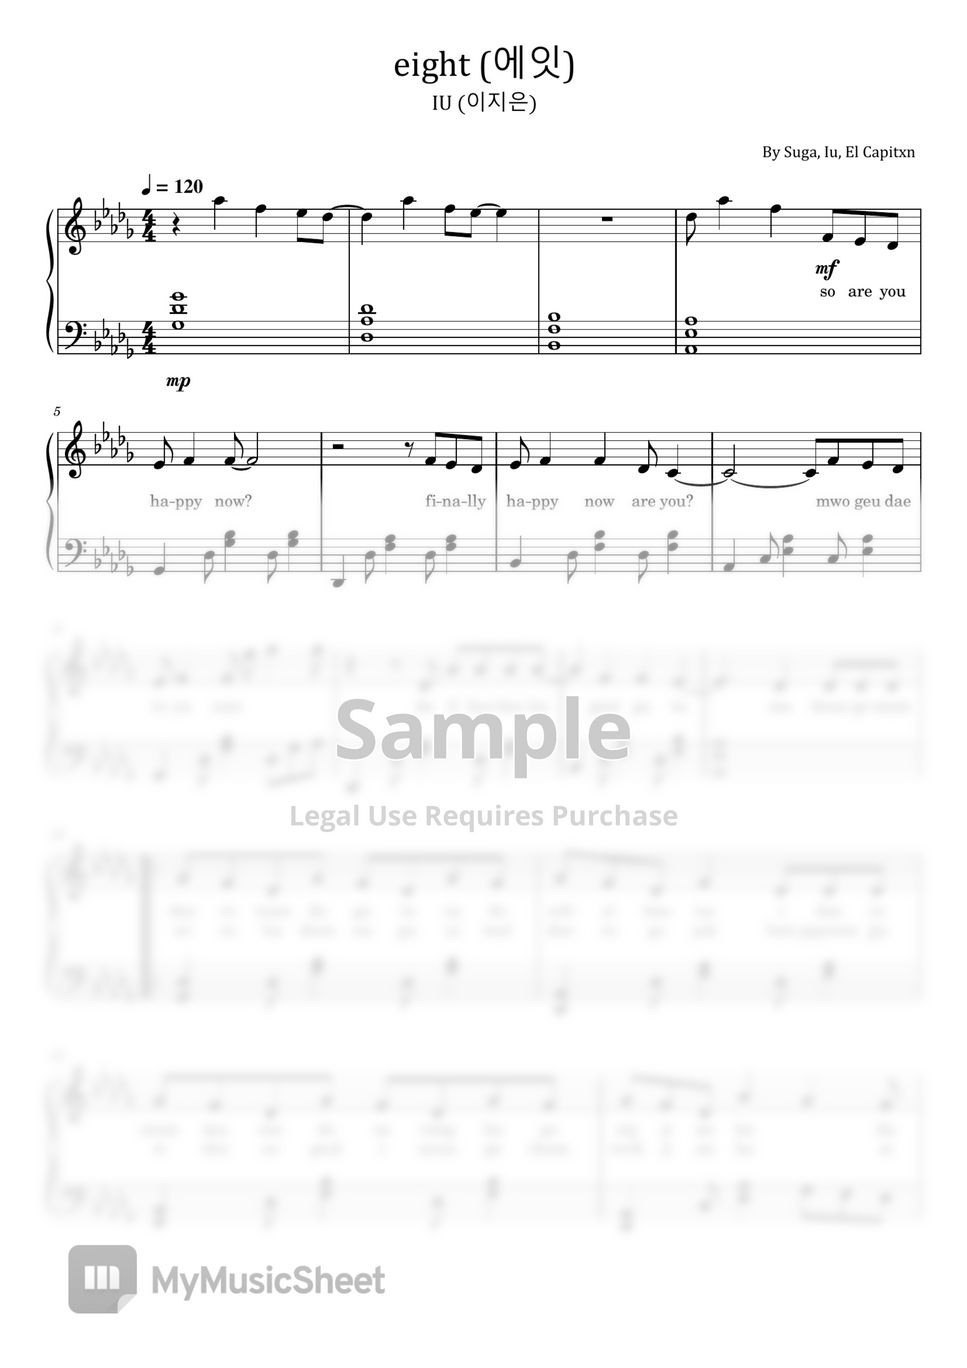 Suga, Iu, El Capitxn - eight (에잇) (IU (이지은) - For Piano With Lyric) by poon